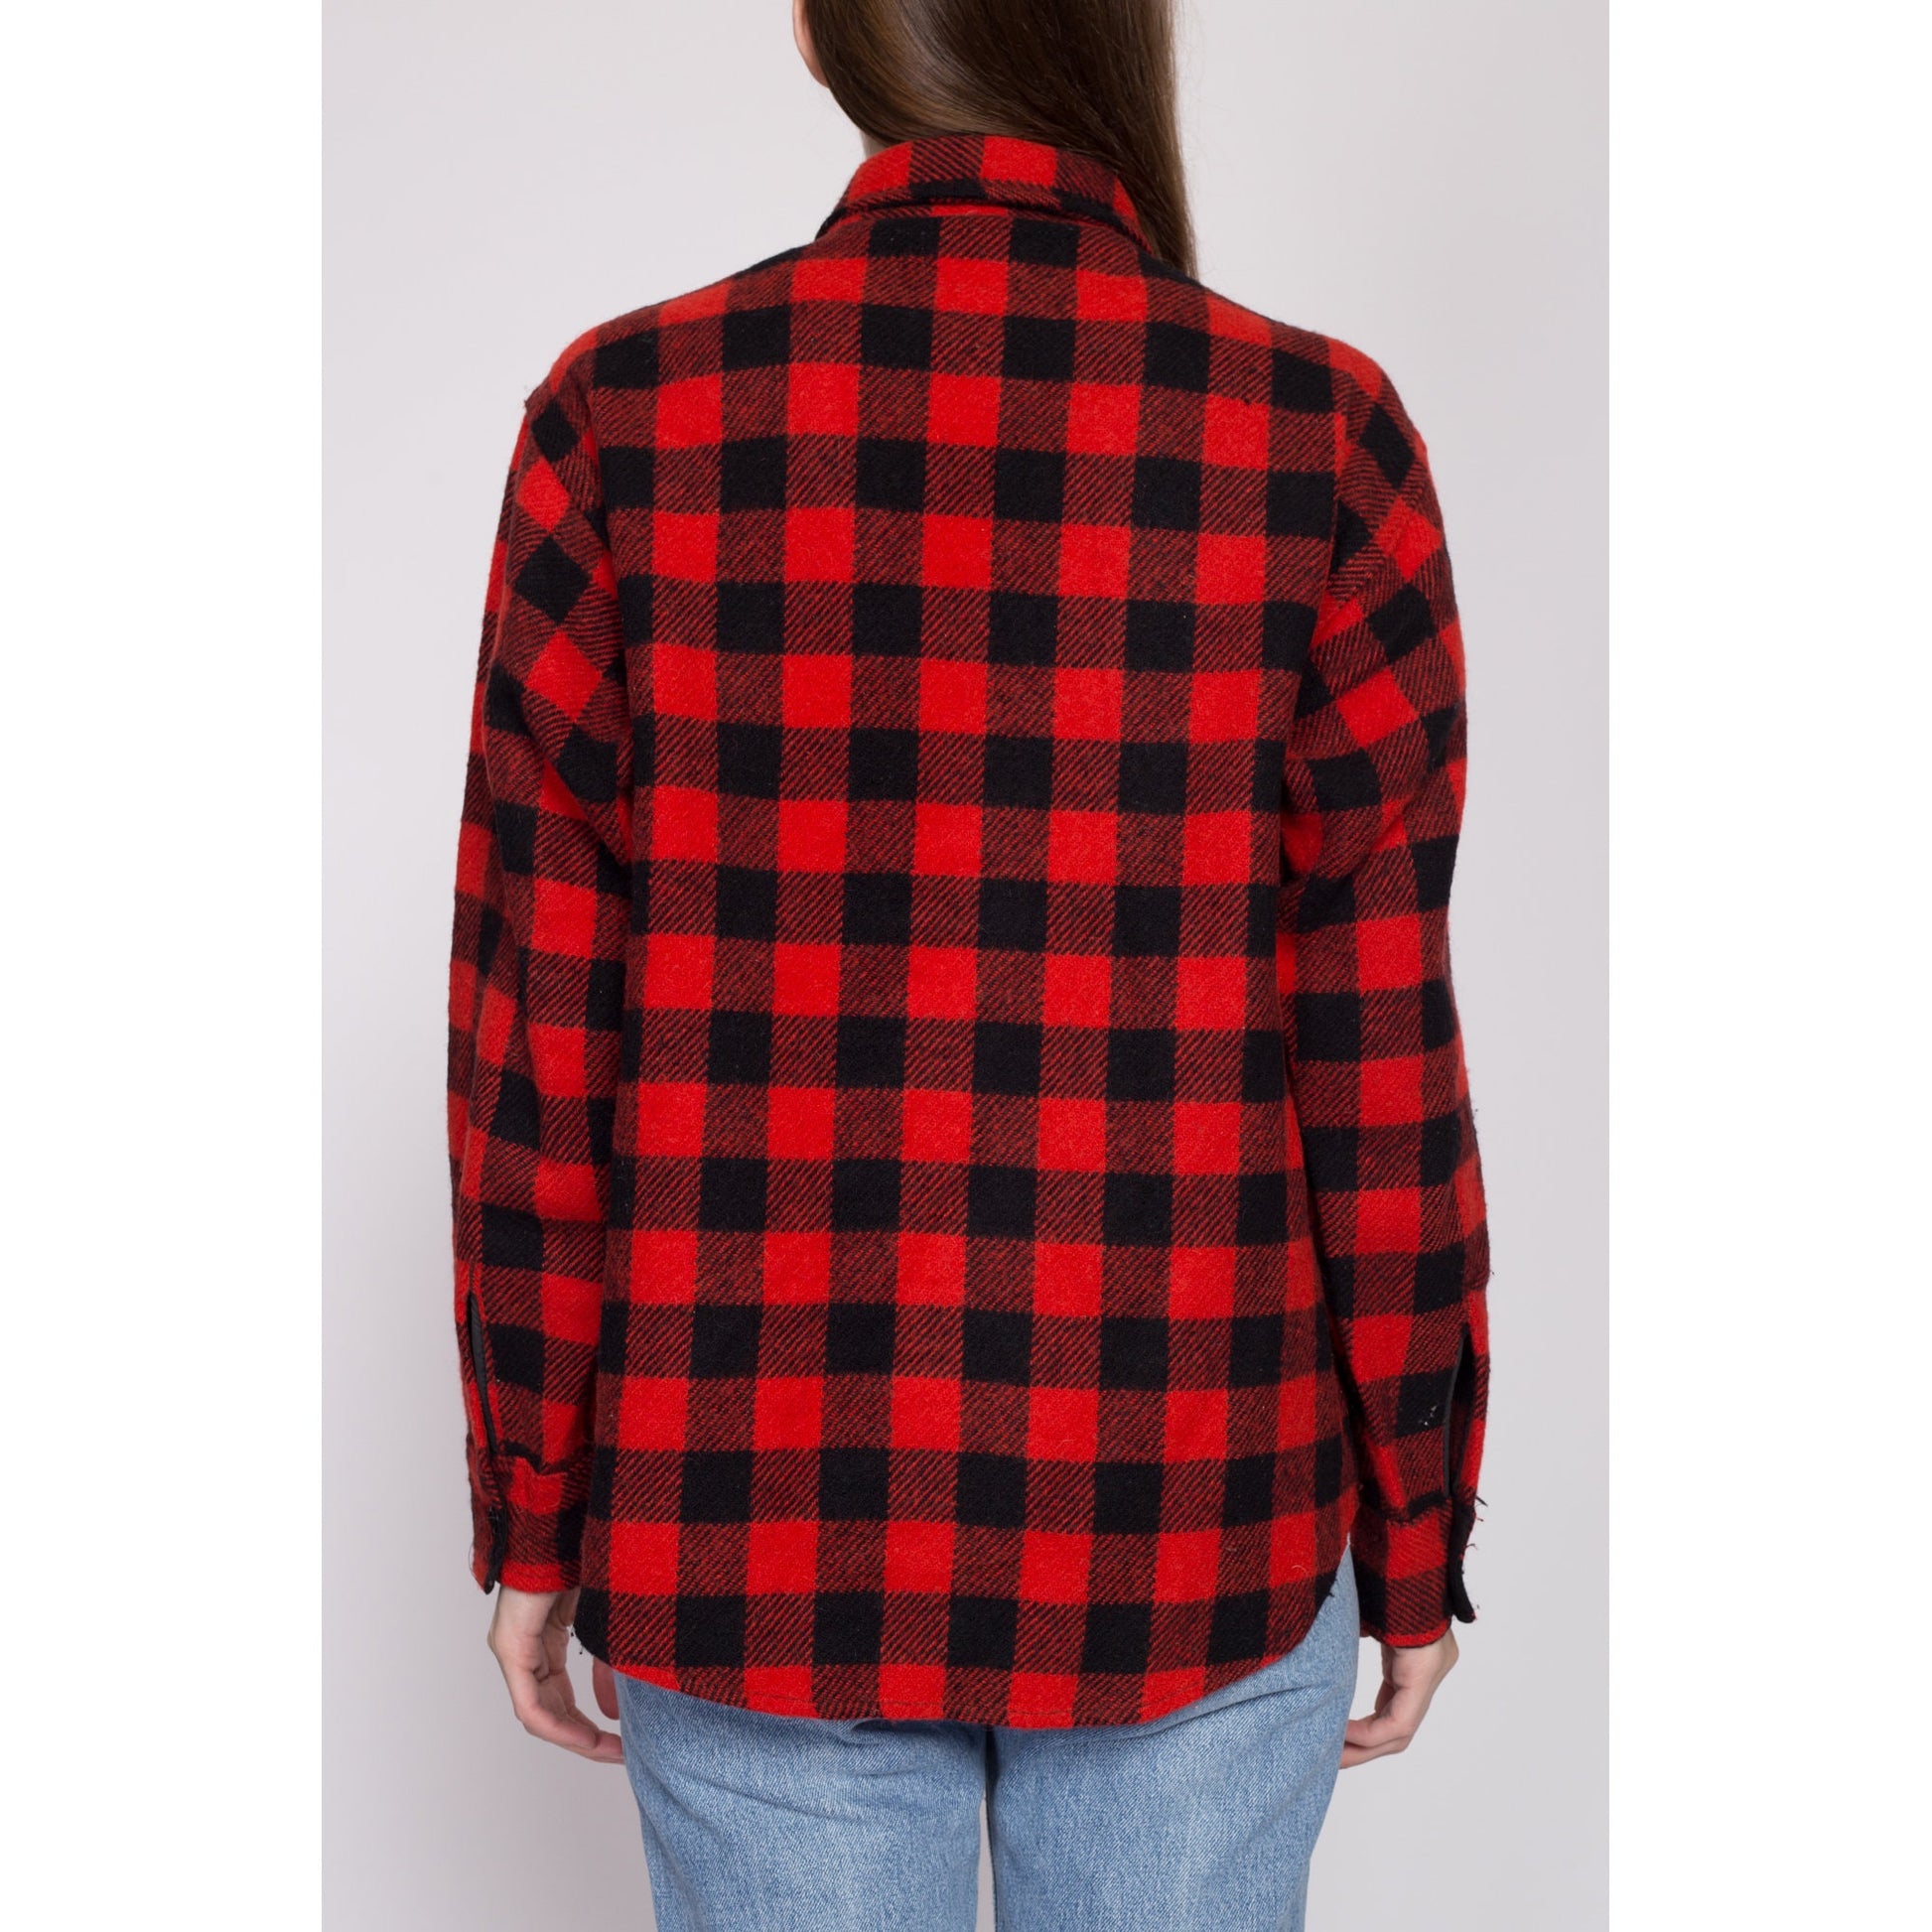 M-L| 70s Melton Buffalo Plaid Wool Shirt Jacket - Men's Medium, Women's Large | Vintage Red & Black Lumberjack Overshirt Shacket